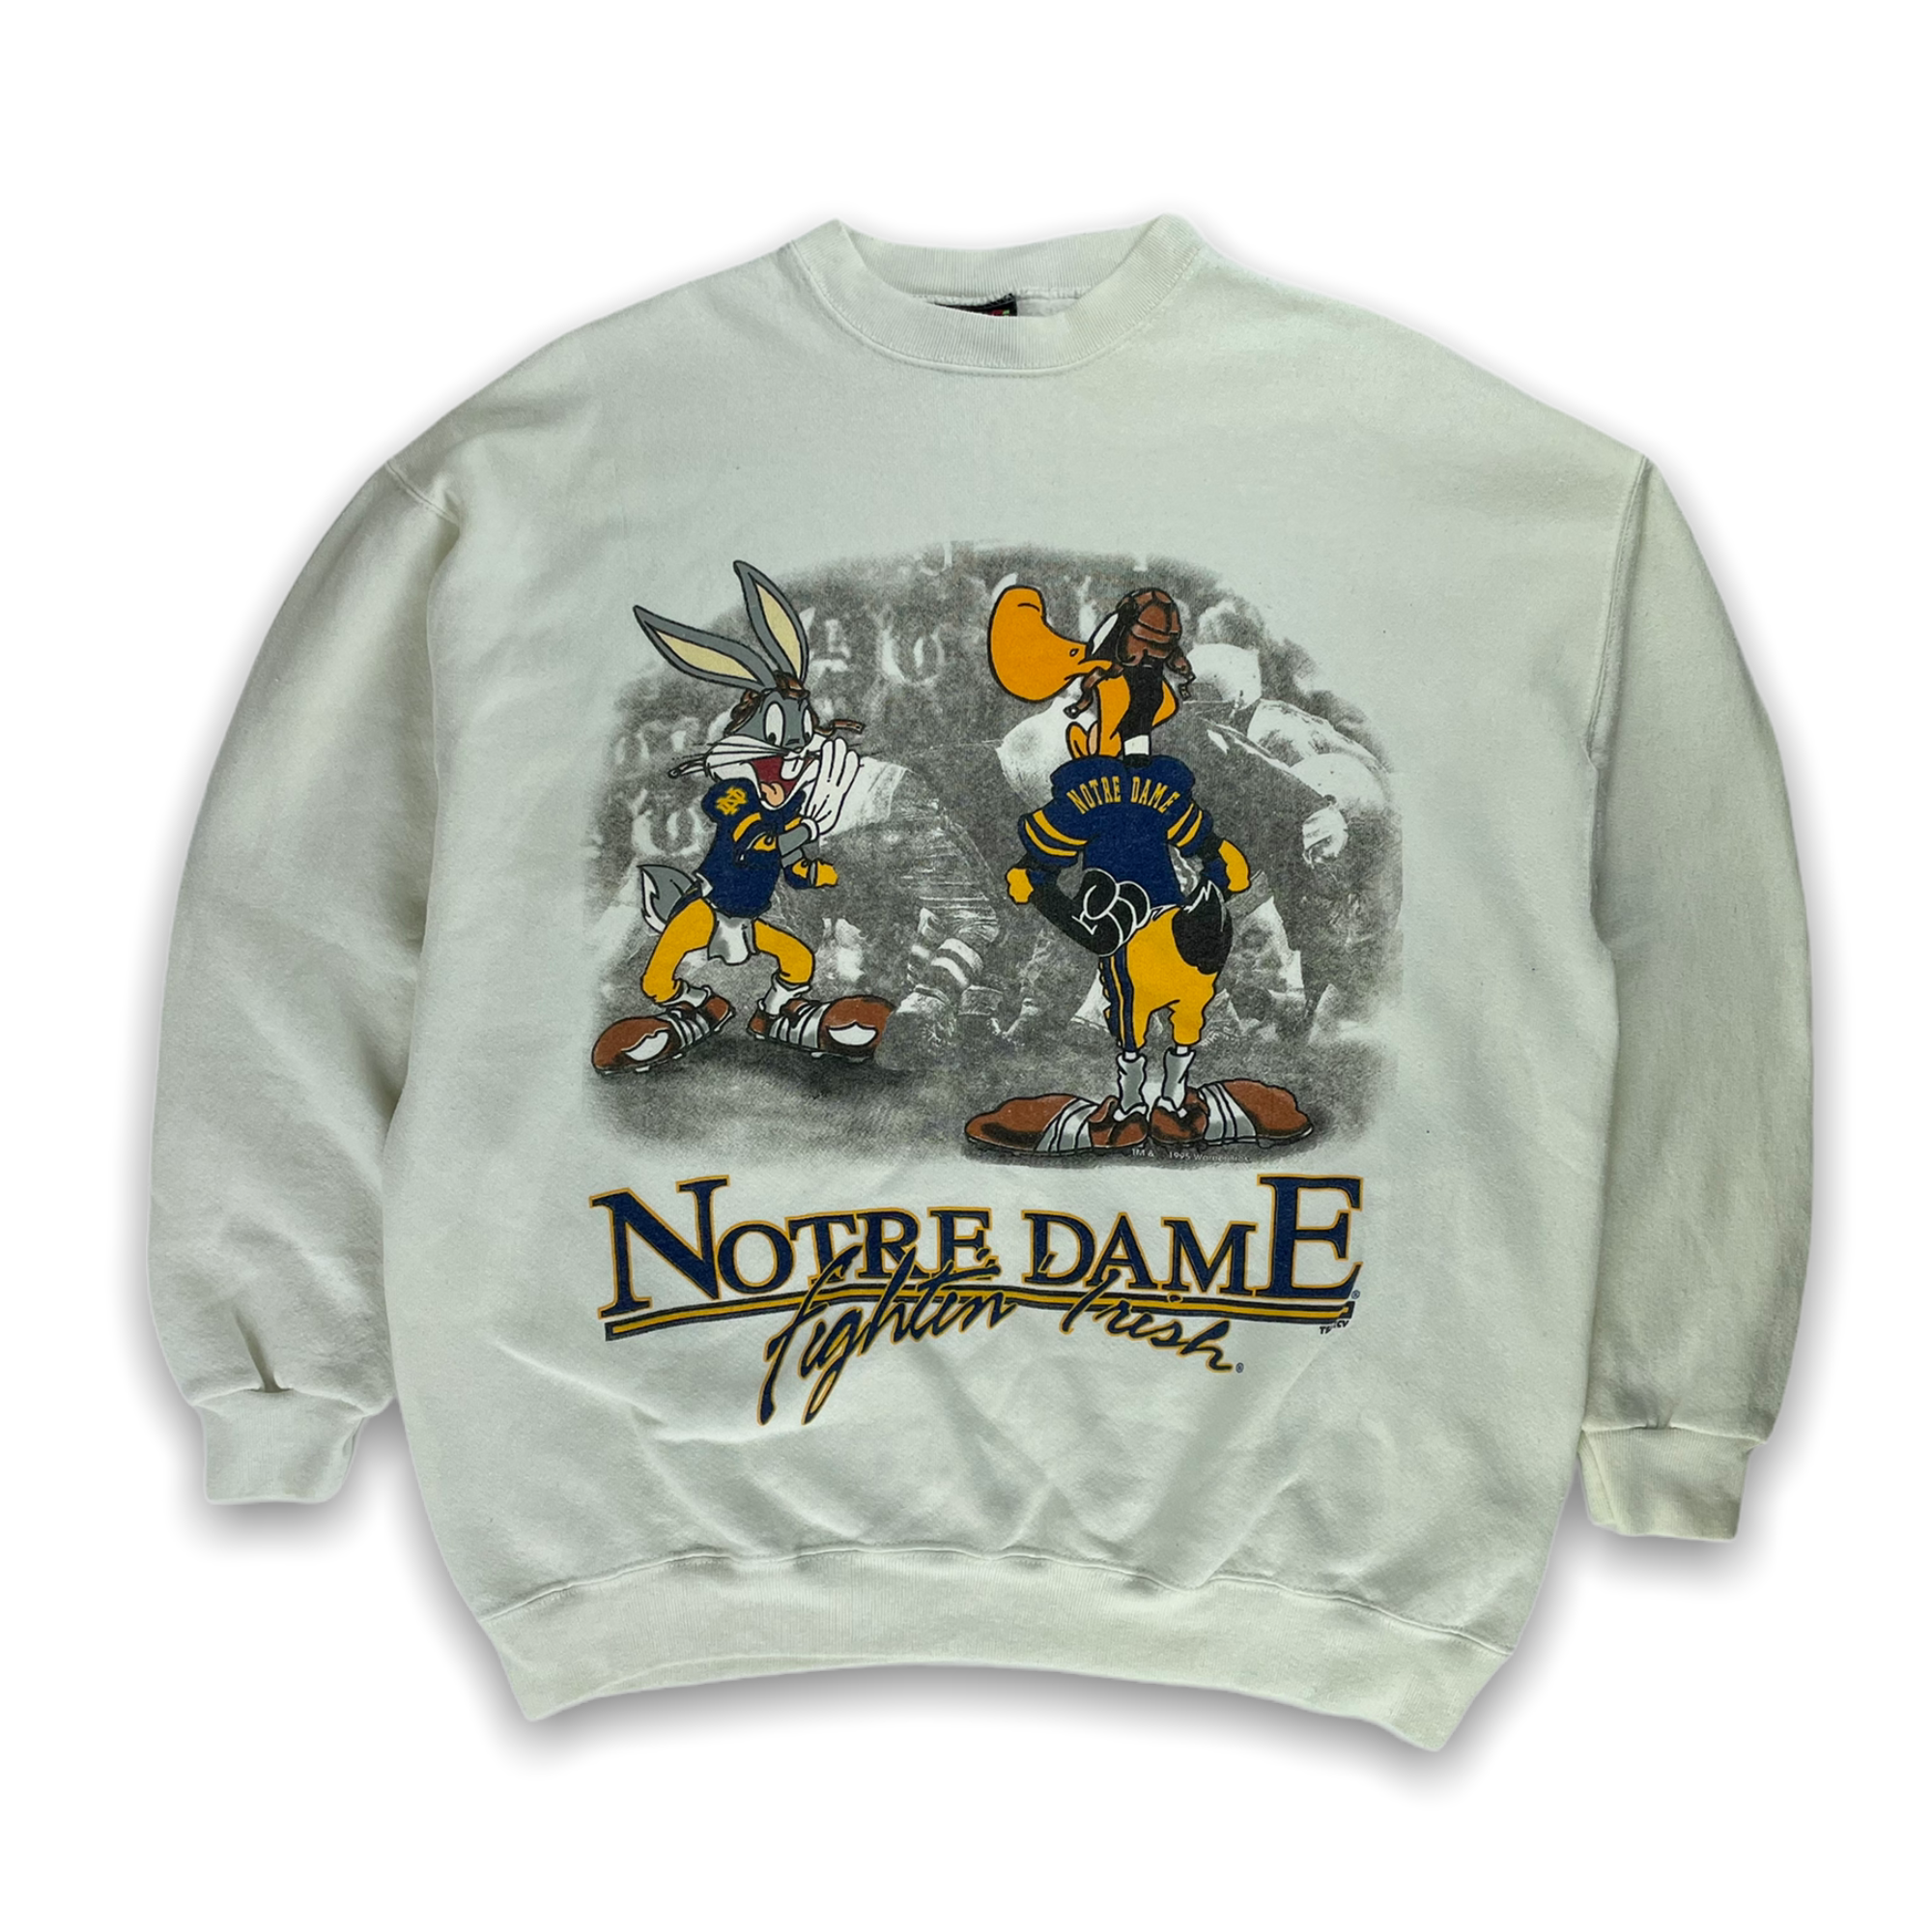 Vintage 90s Looney Tunes Notre Dame Sweatshirt - Restorecph